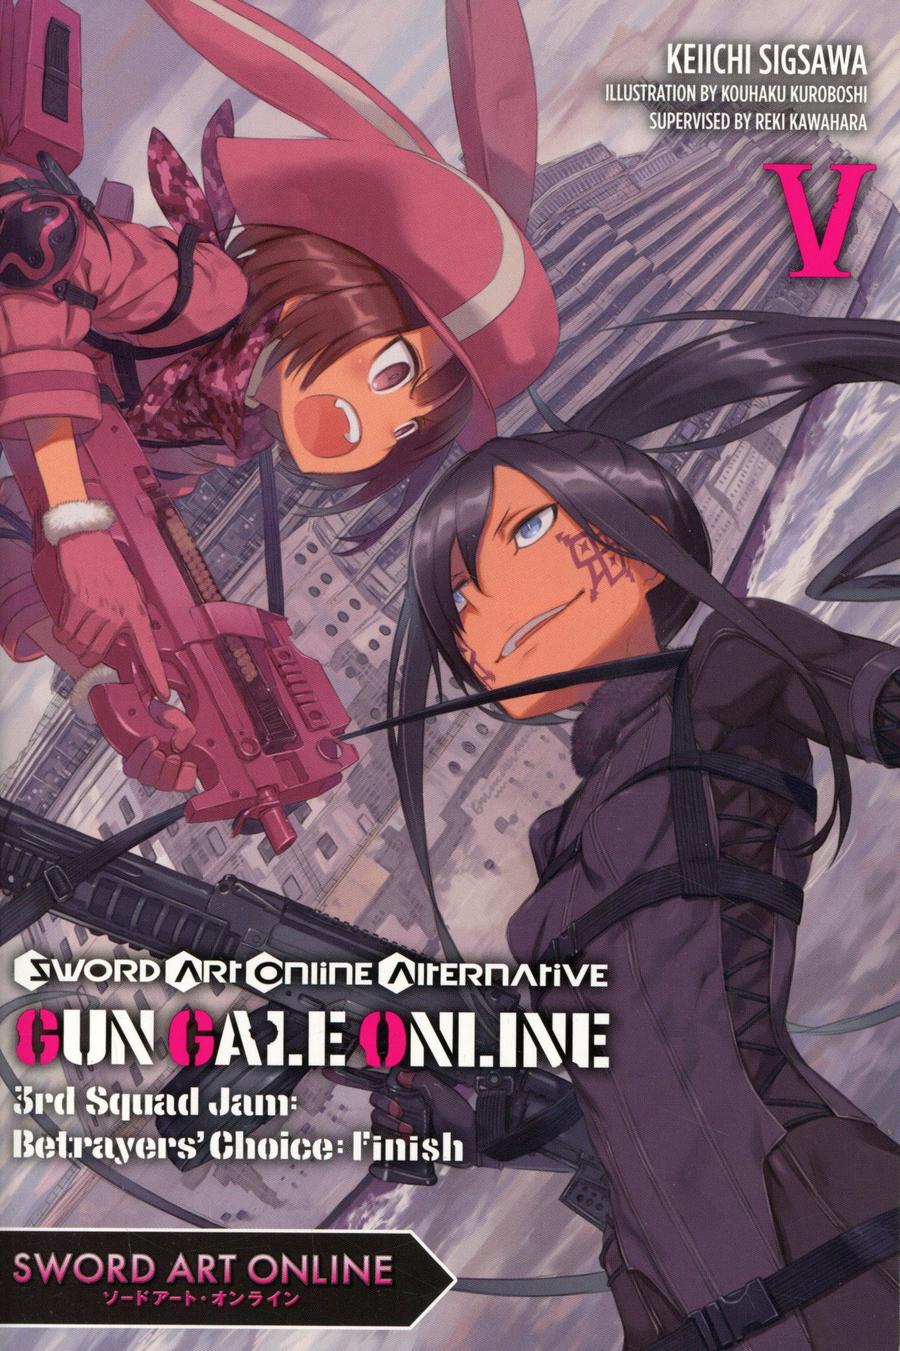 Sword Art Online Alternative Gun Gale Online Light Novel Vol 5 3rd Squad Jam Betrayers Choice Finish